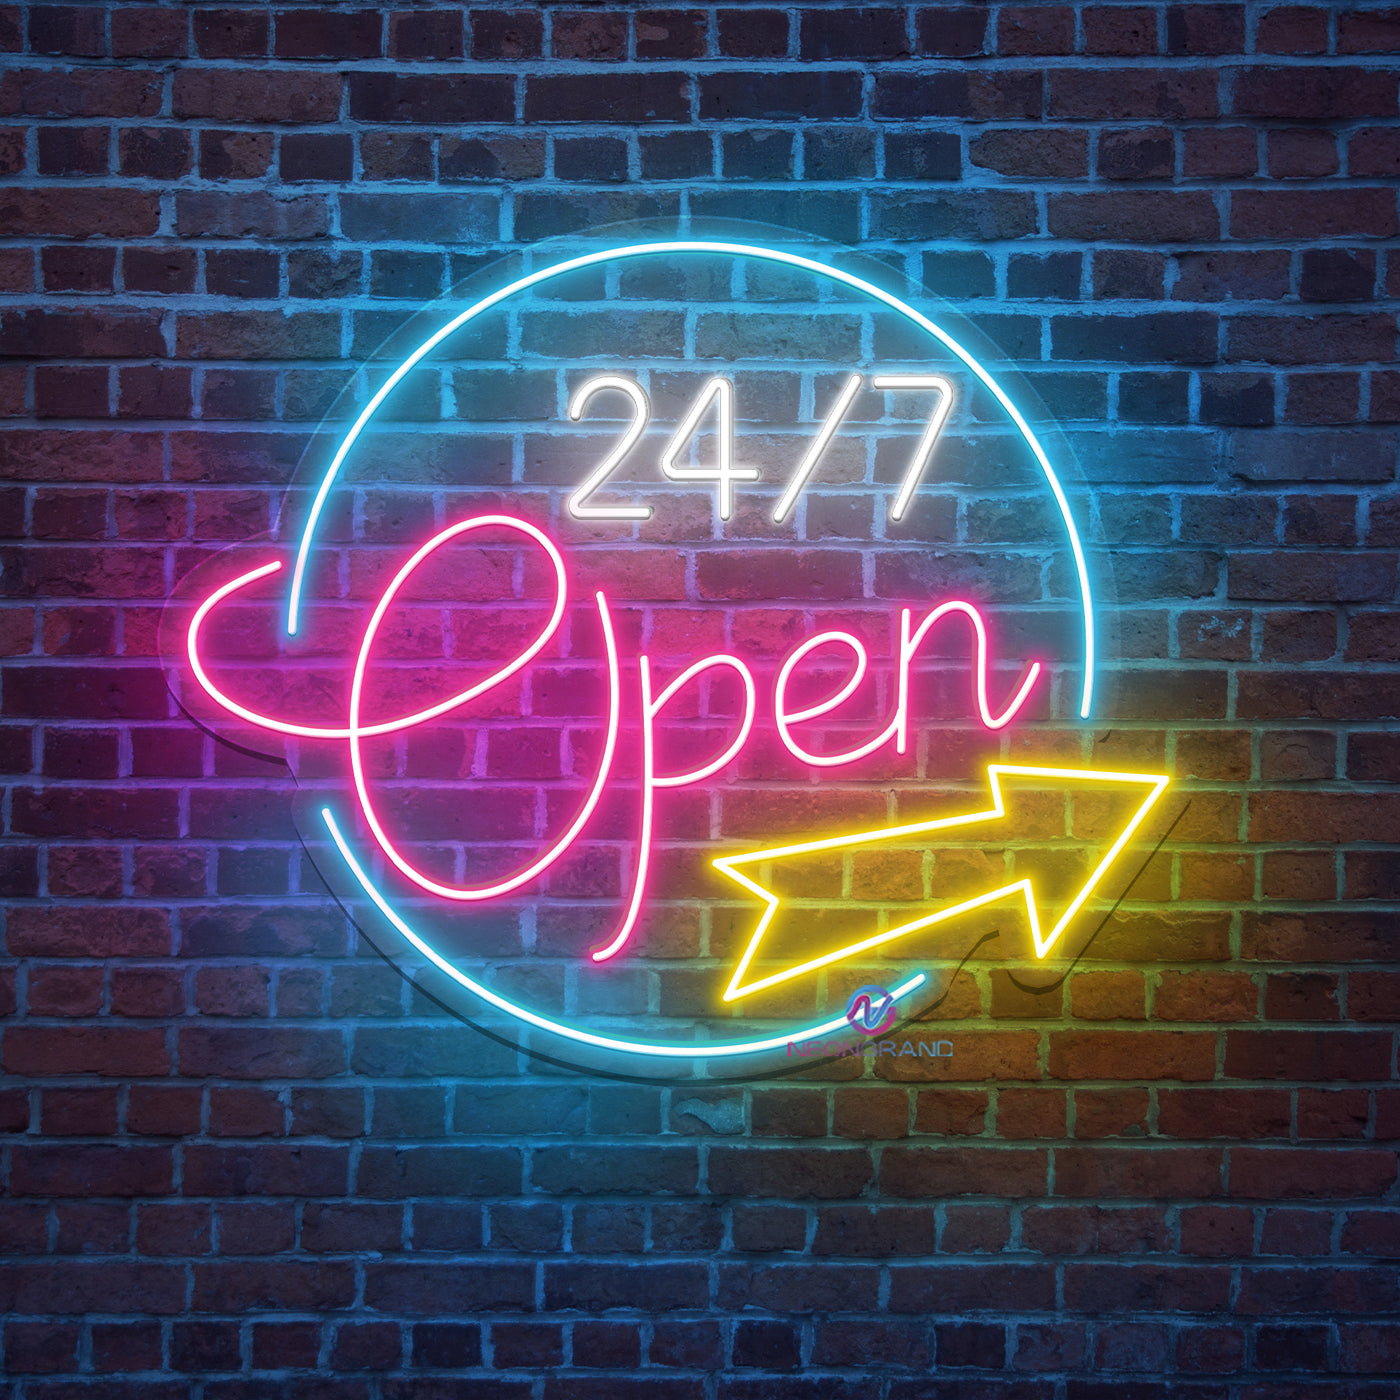 Open 24/7 Neon Sign Business Led Light Storefront